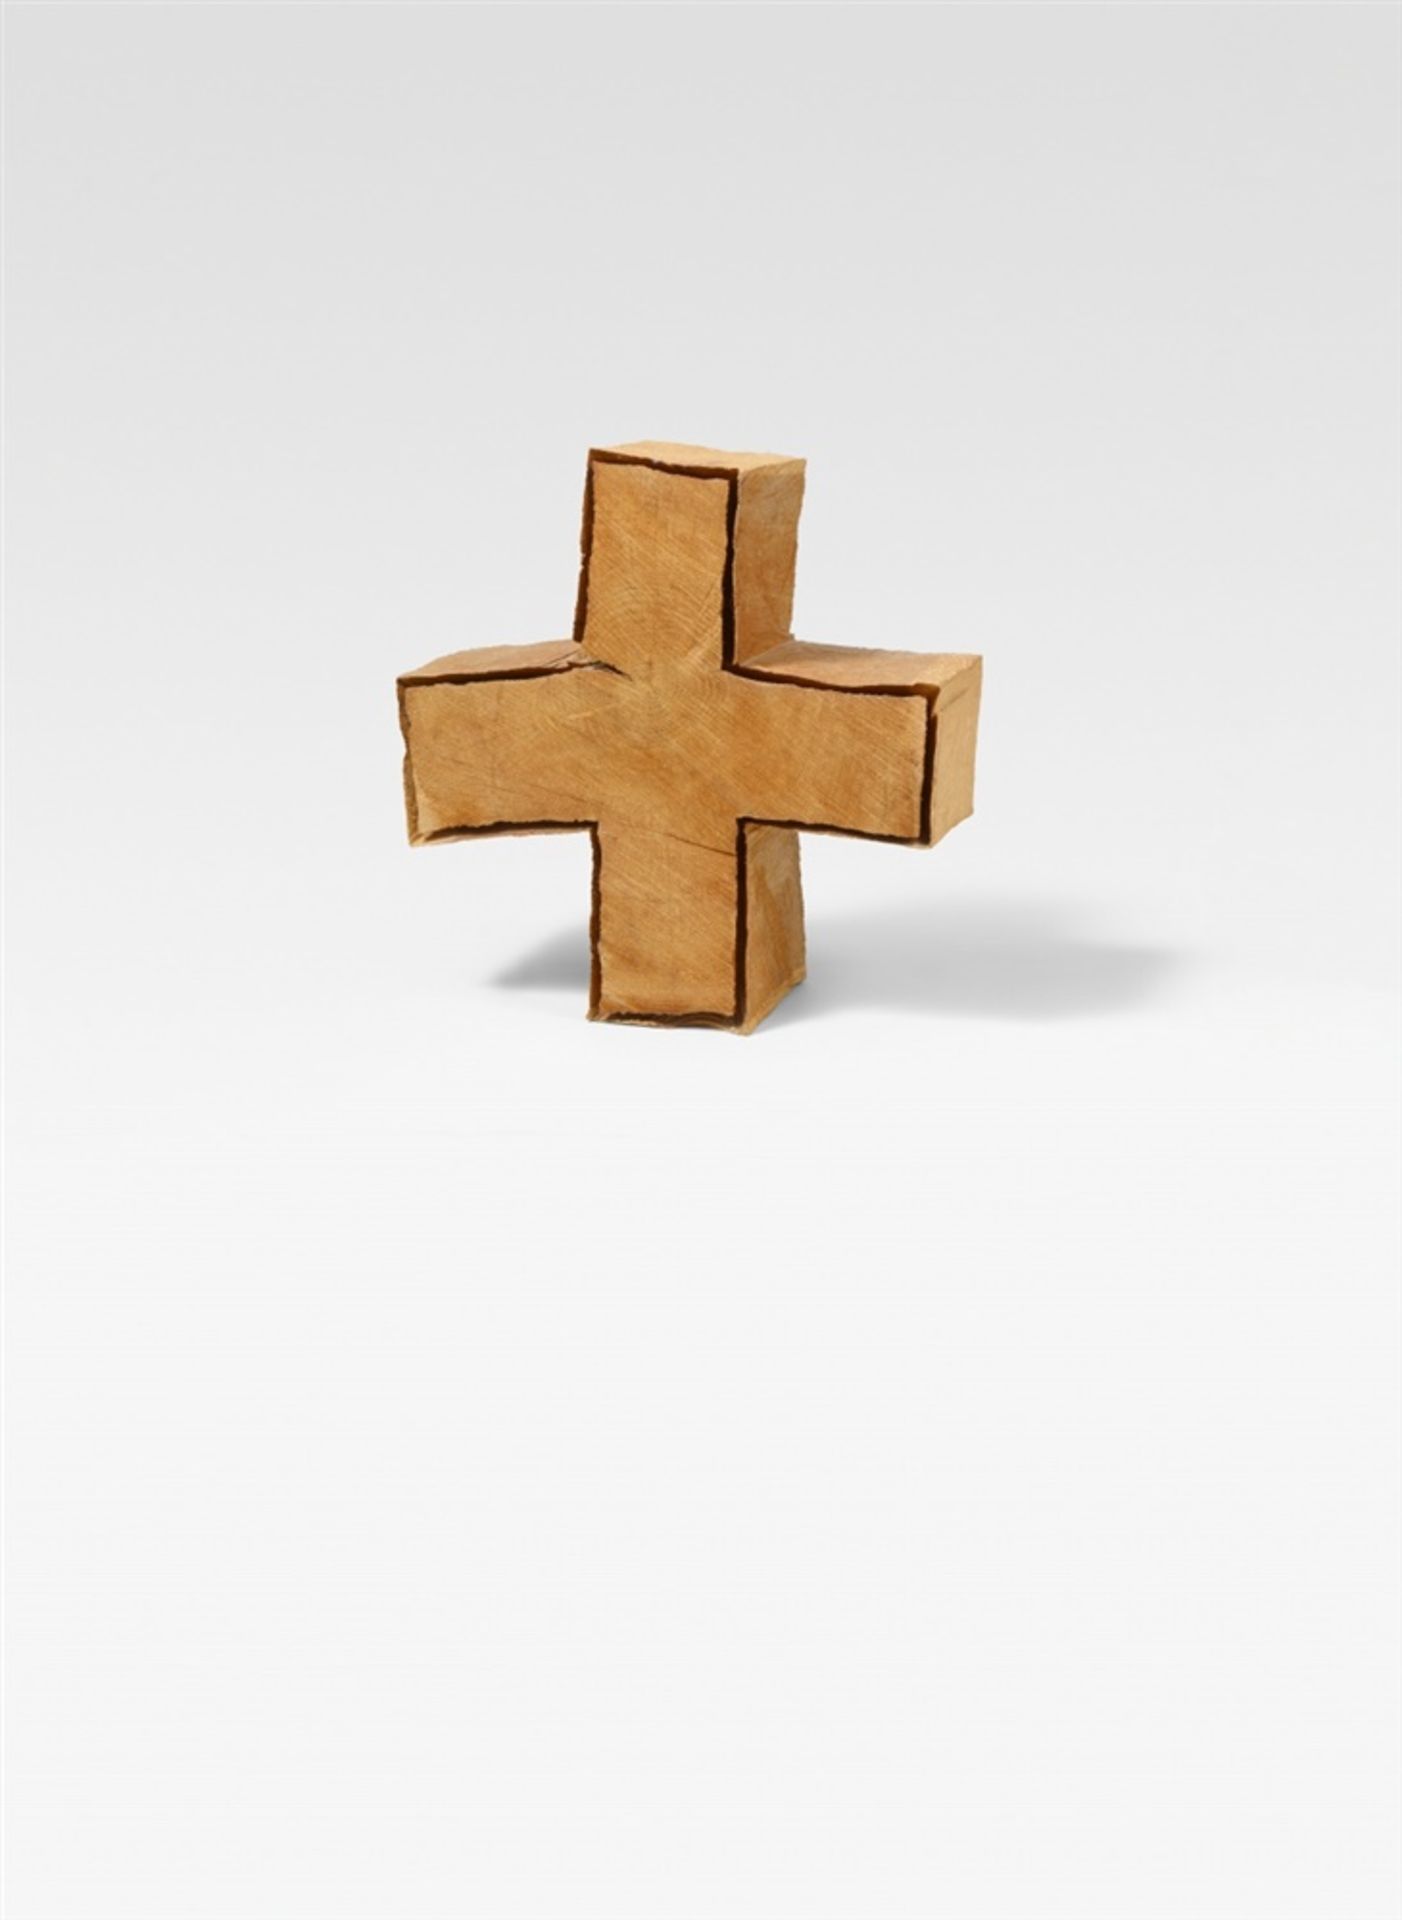 David NashOak Cross (Cut Corners Skellig Cross)